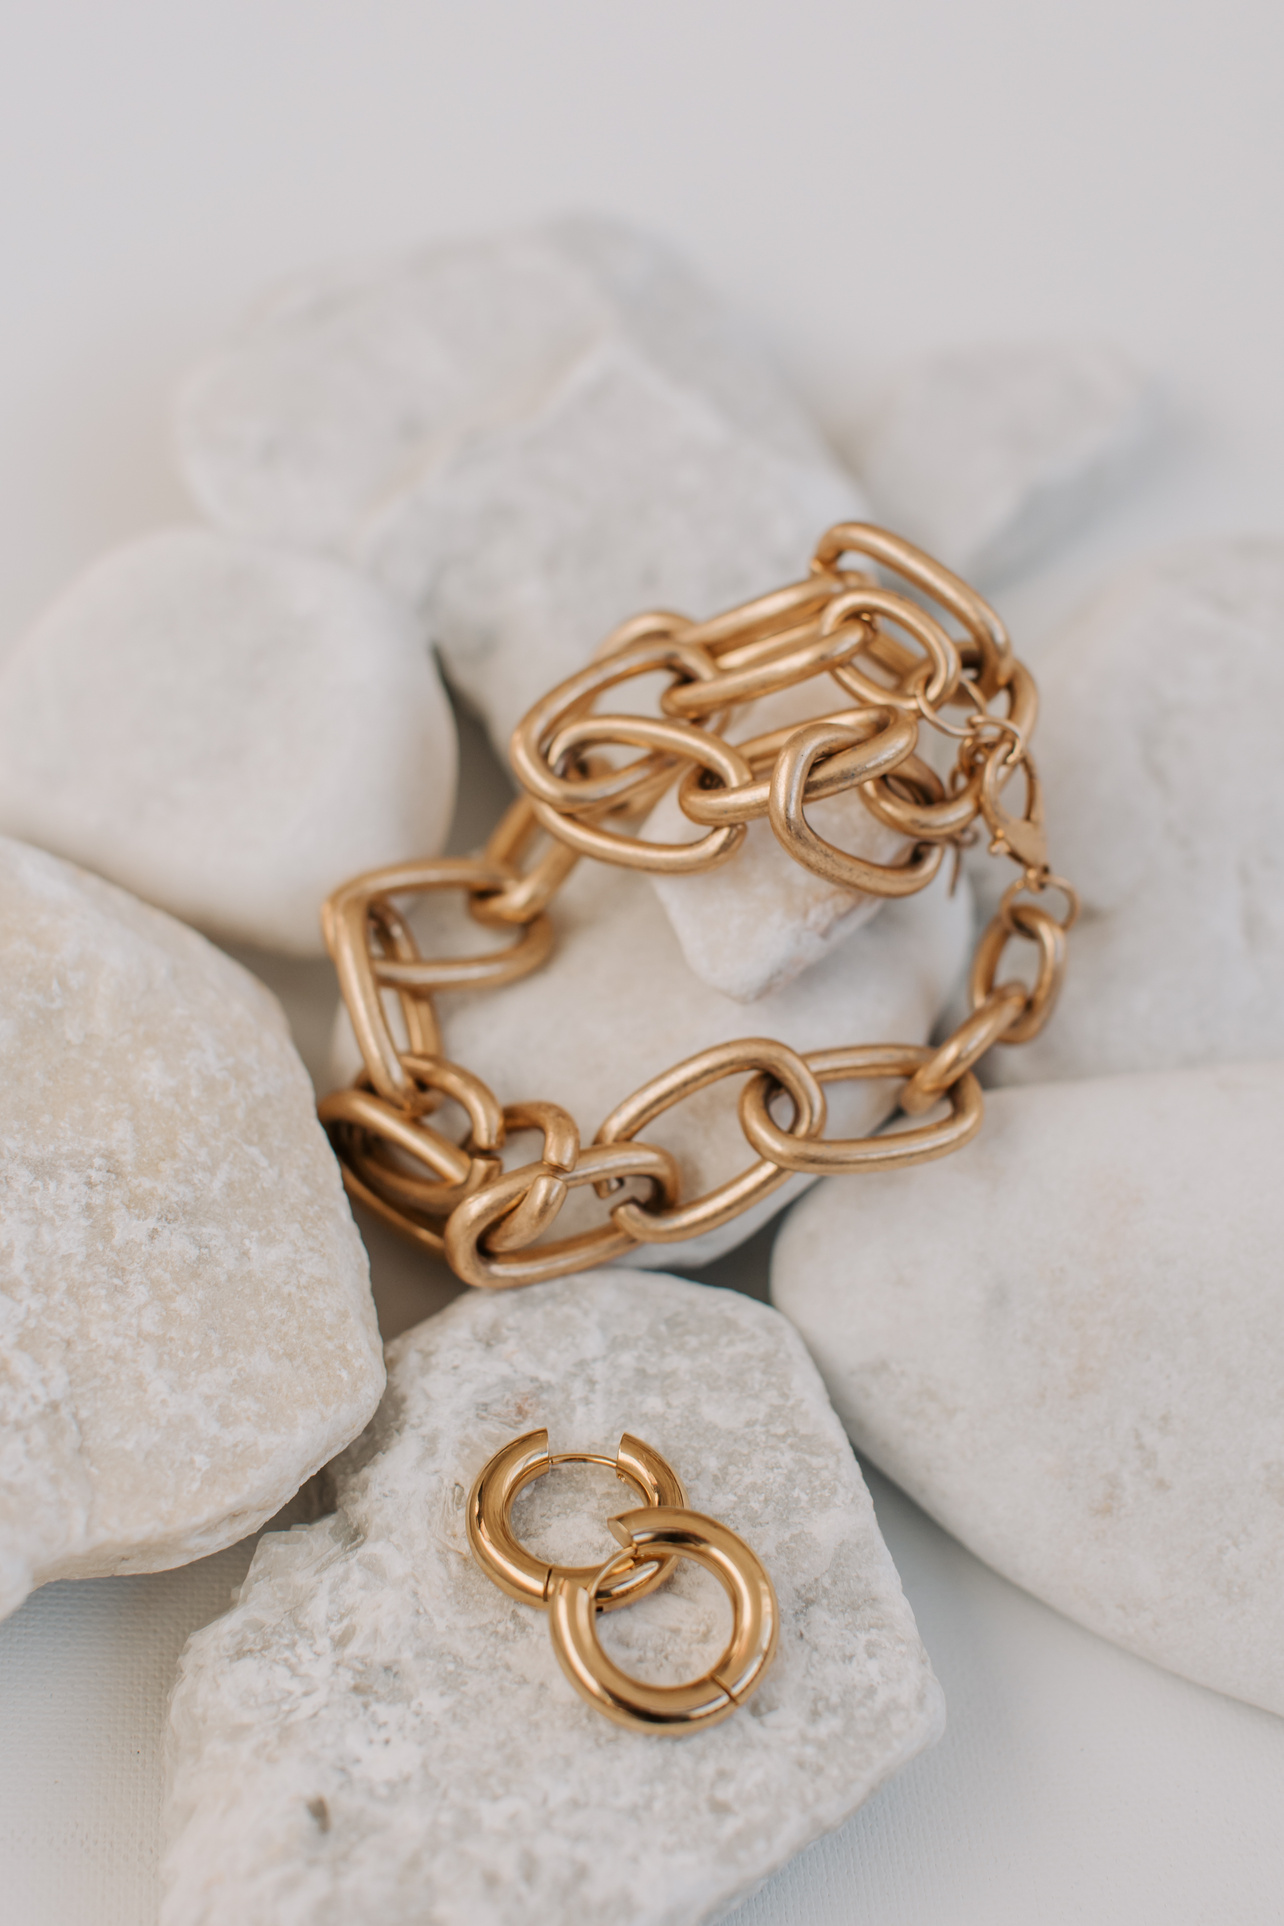 Chain Bracelet and Gold Earrings